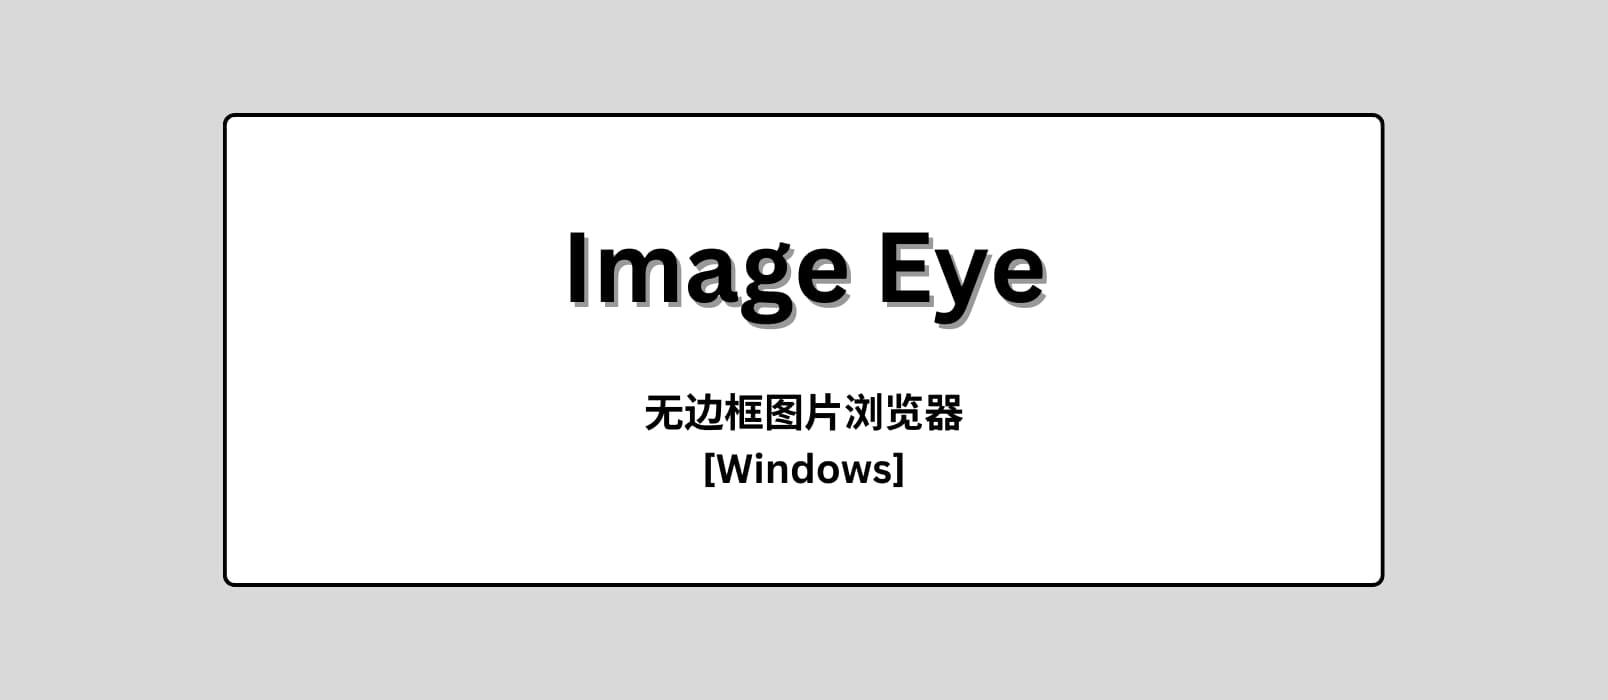 Image Eye - 简洁明了的无边框图片浏览器[Windows]